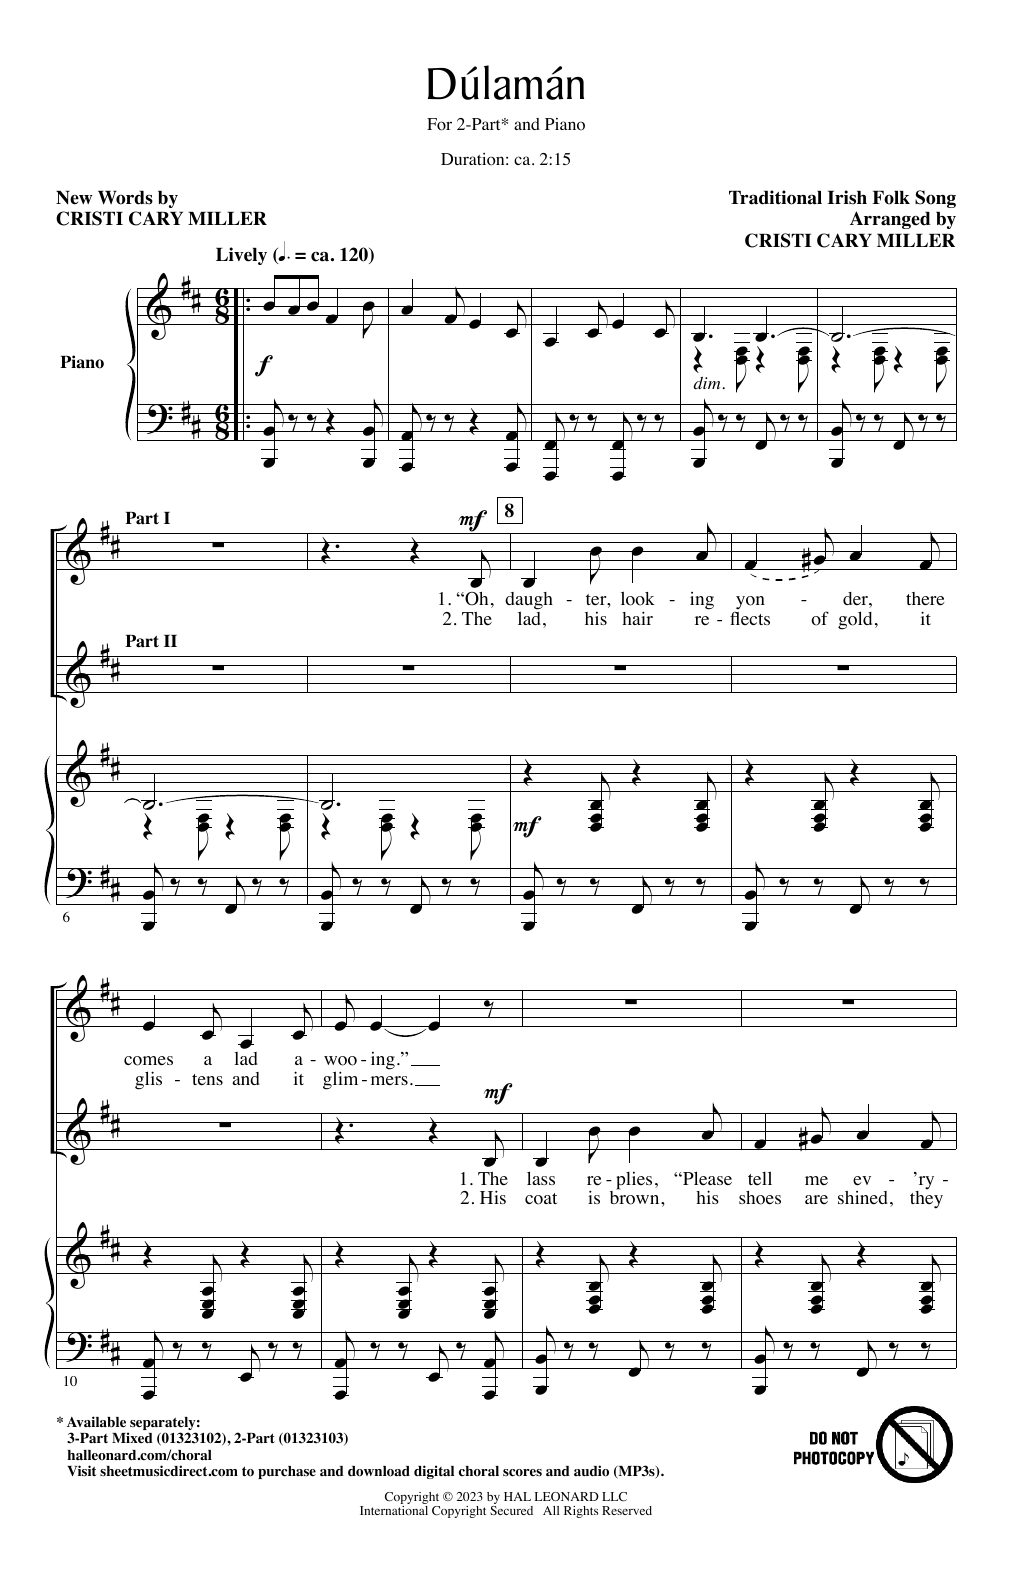 Irish Folk Song Dúlamán (arr. Cristi Cary Miller) Sheet Music Notes & Chords for 2-Part Choir - Download or Print PDF